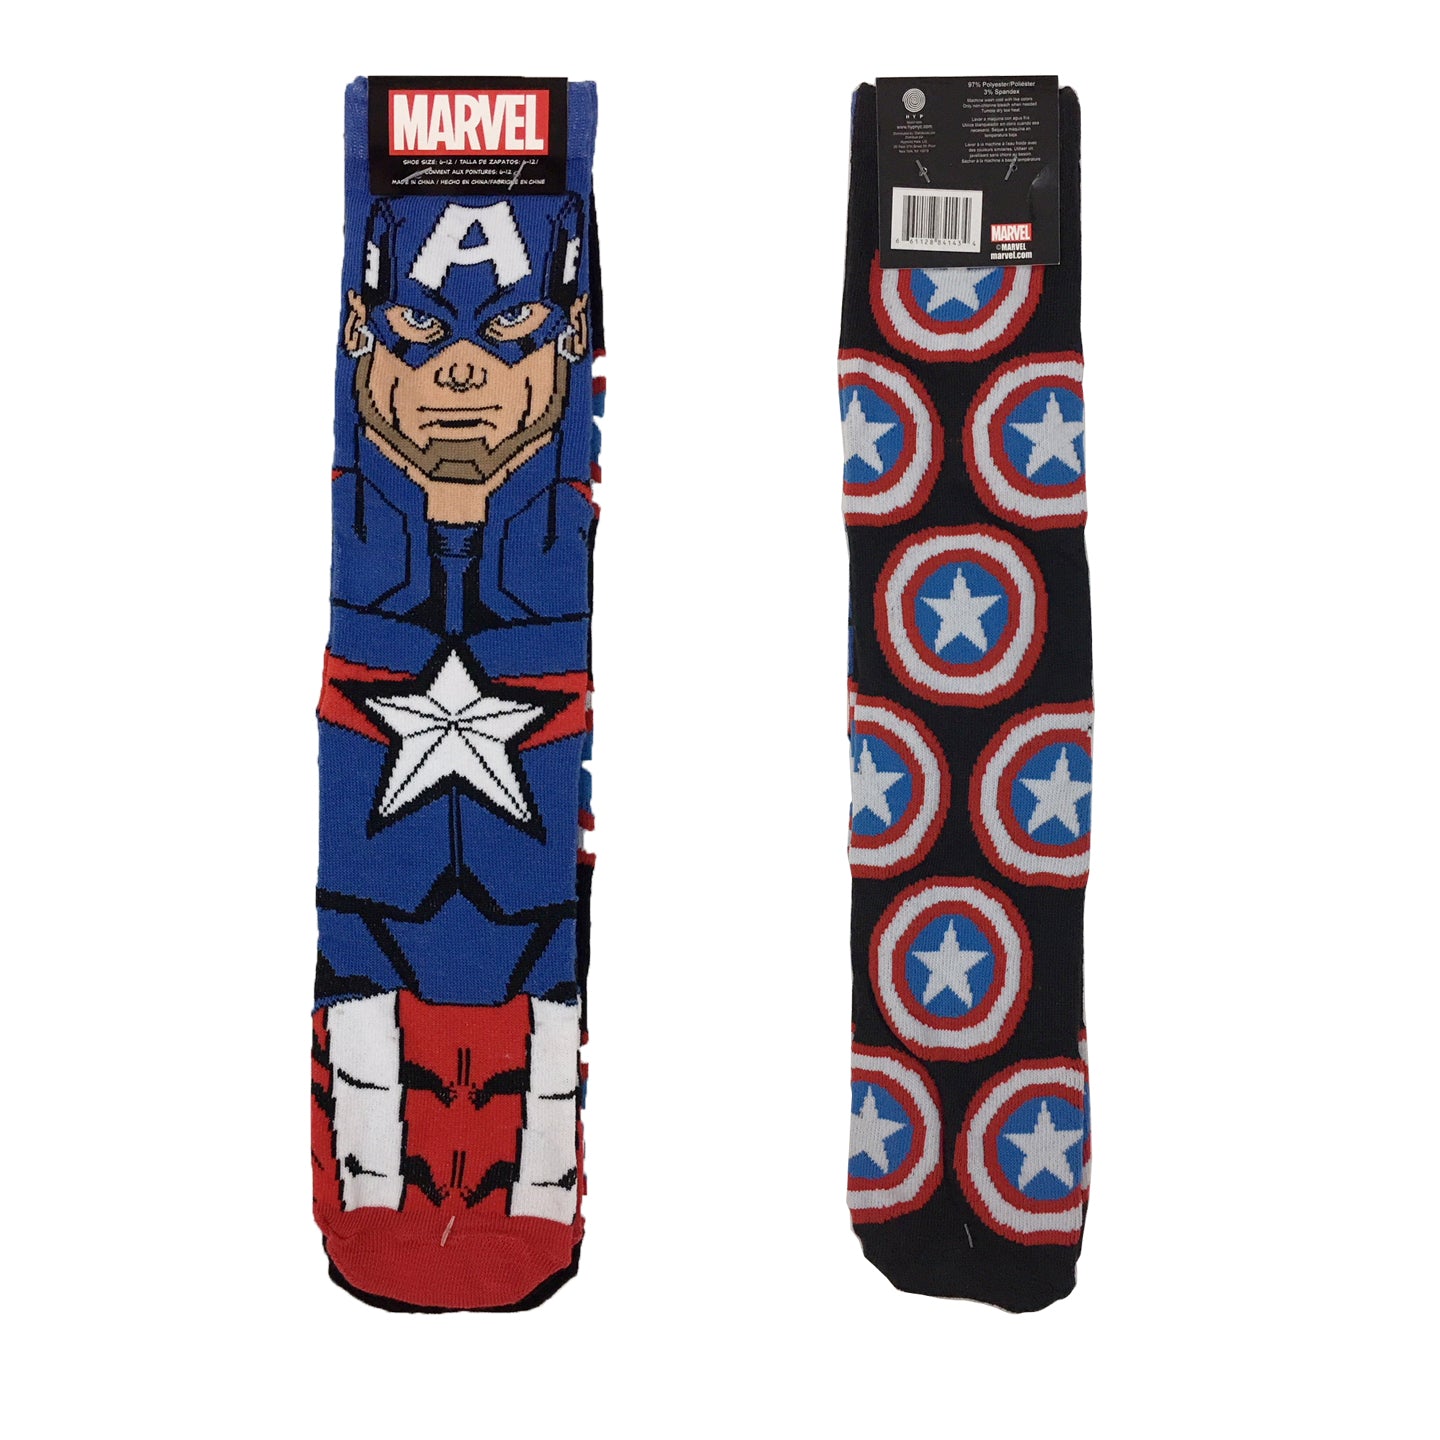 Marvel Captain America Socks 2 Pairs